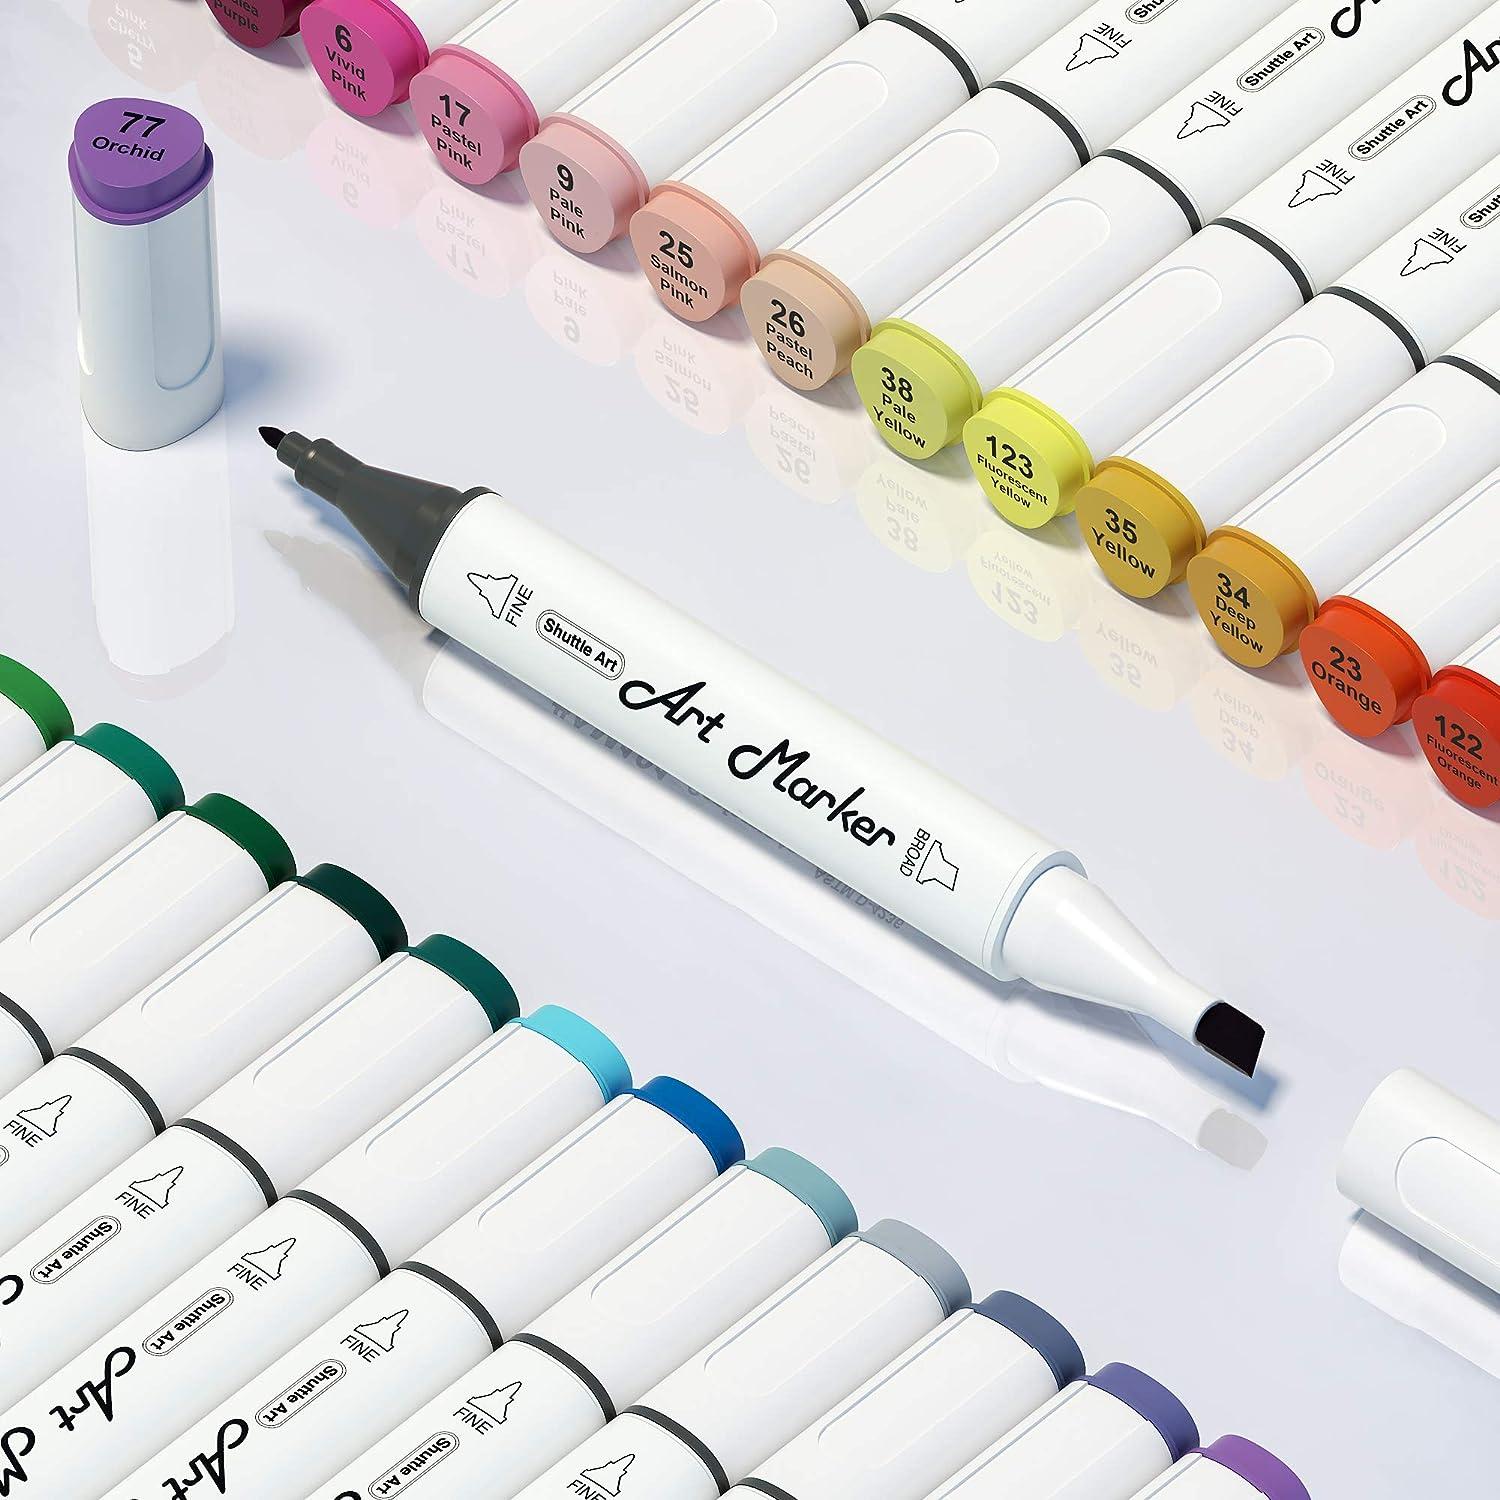 172 Colors Dual Tip Alcohol Based Art Markers,171 Colors plus 1